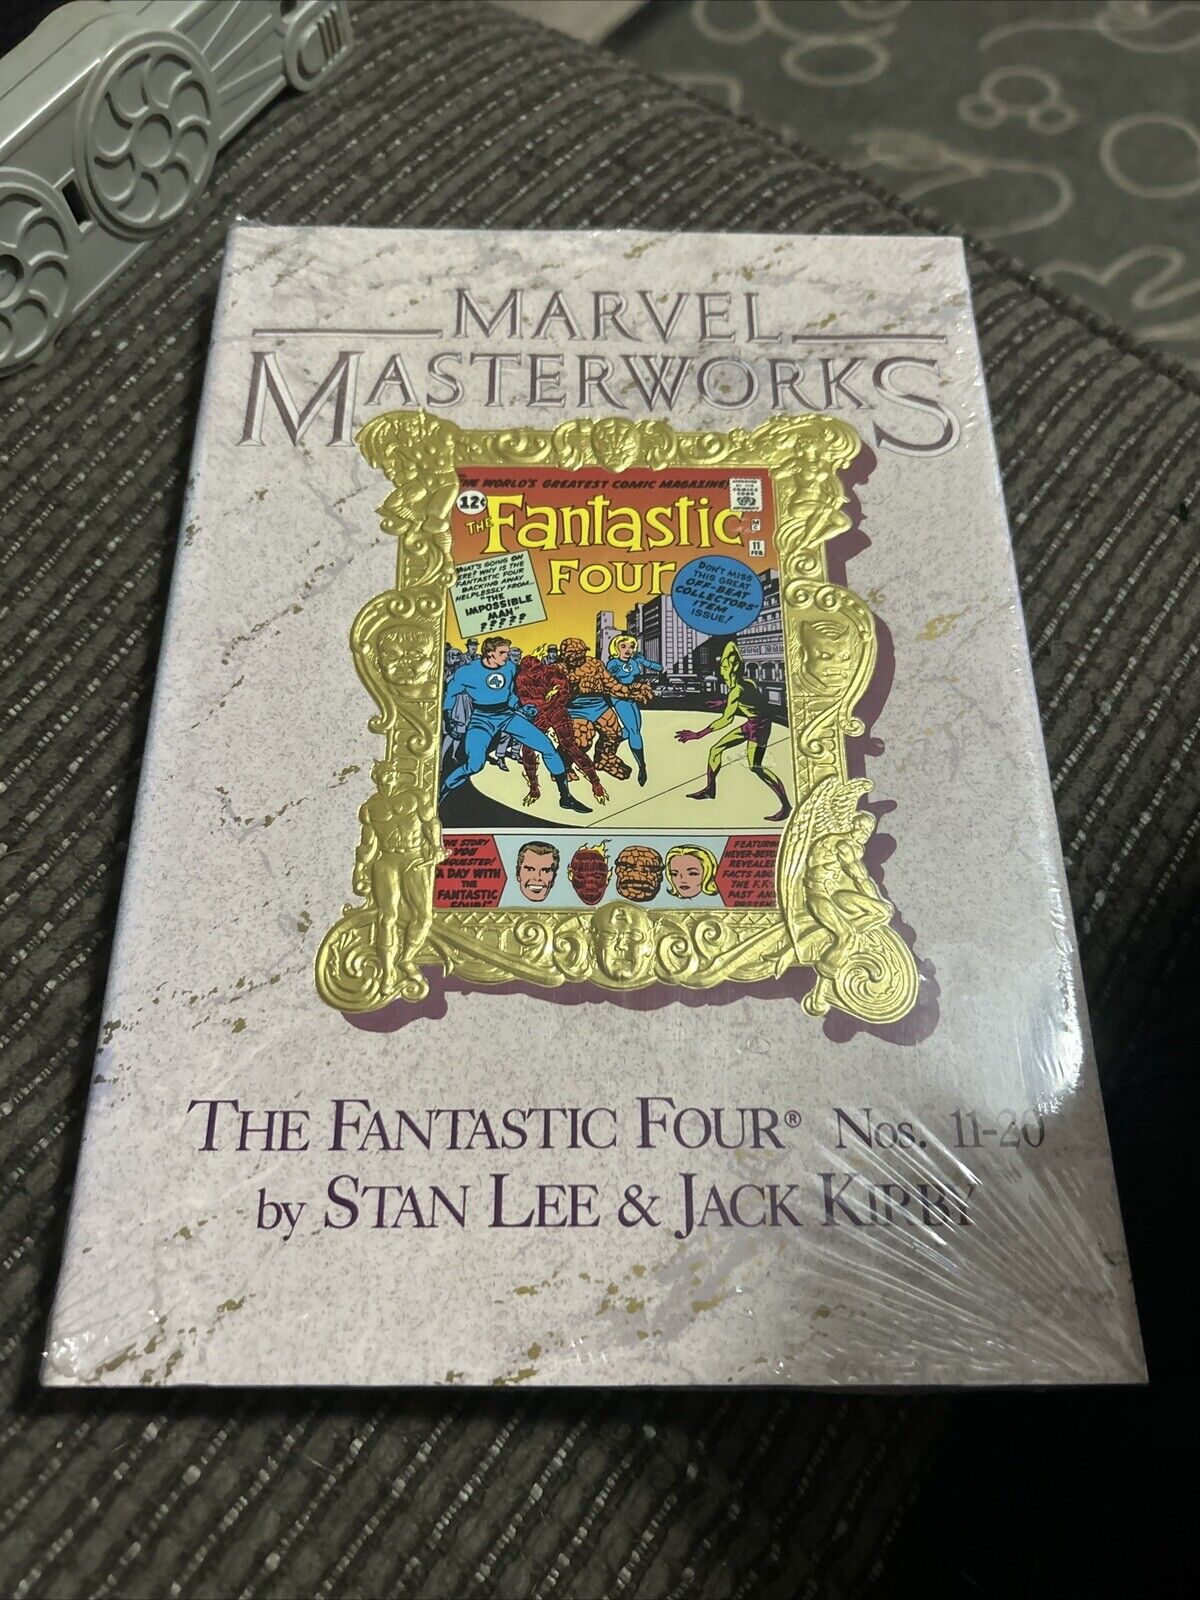 Marvel Masterworks The Fantastic Four Vol 6 No. 11-20 NEW Sealed Comic Book